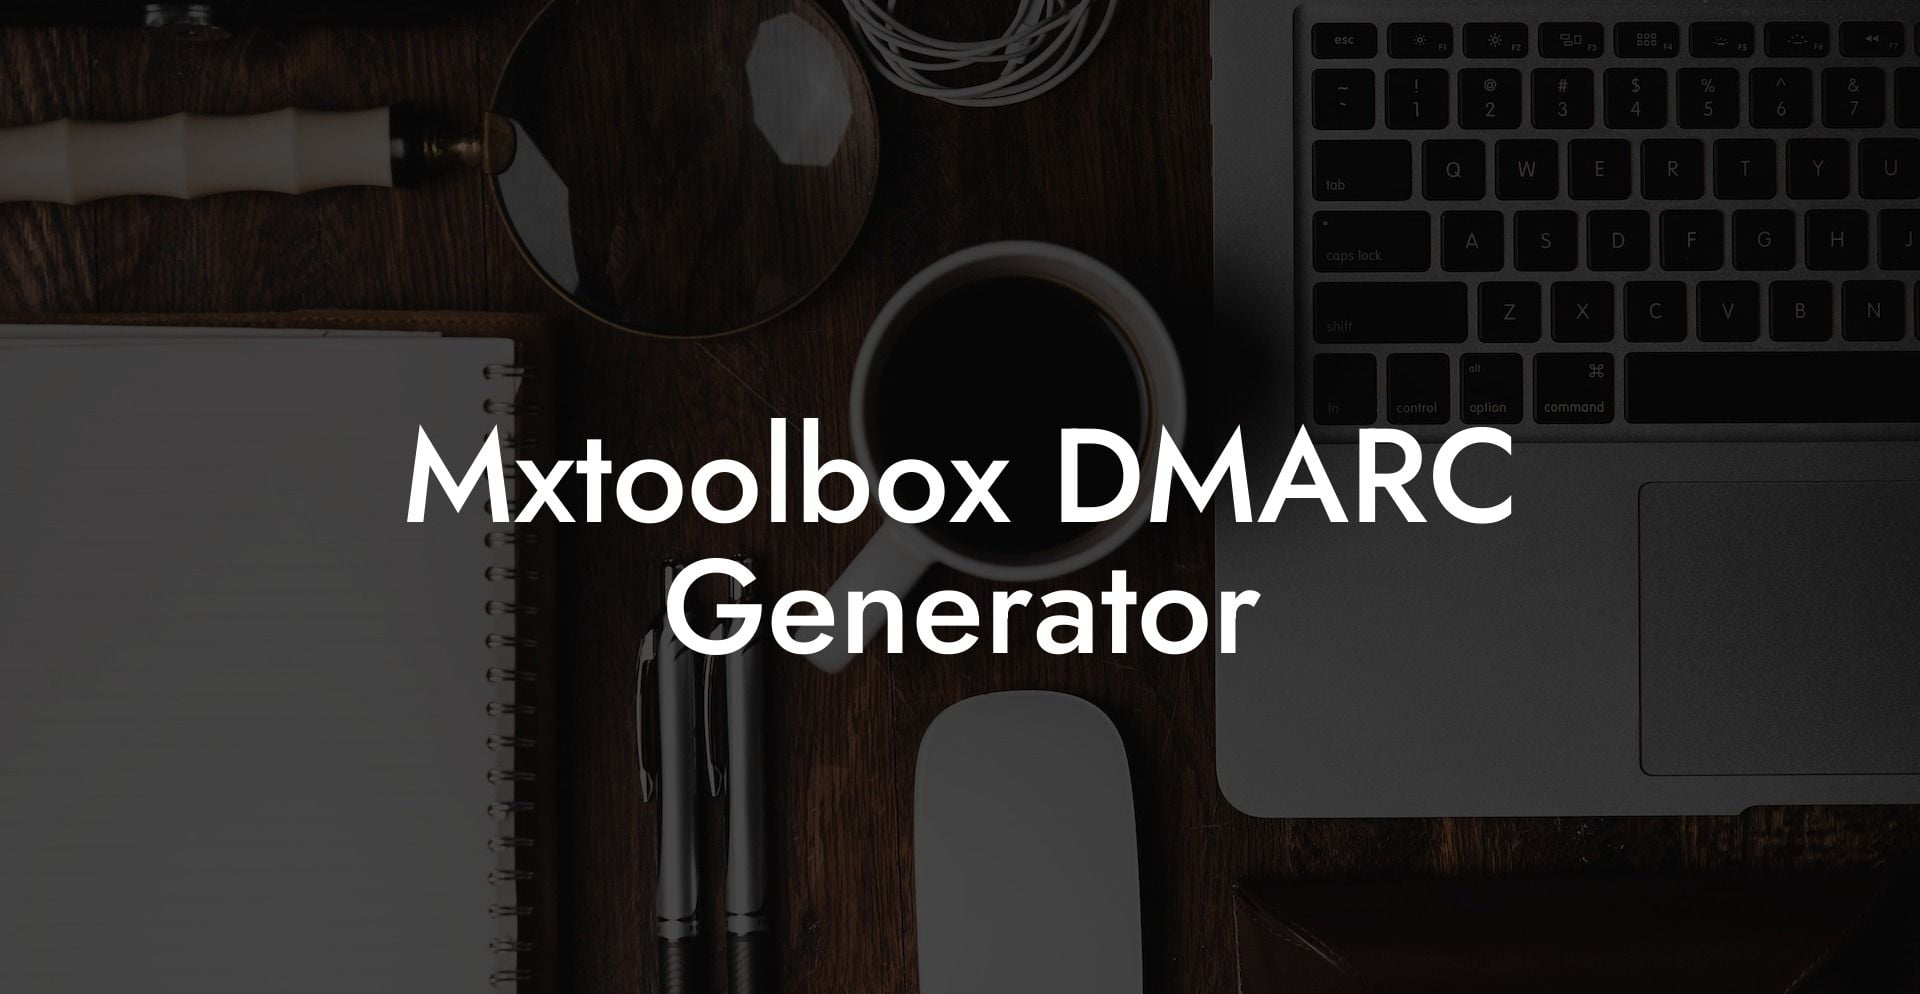 Mxtoolbox DMARC Generator